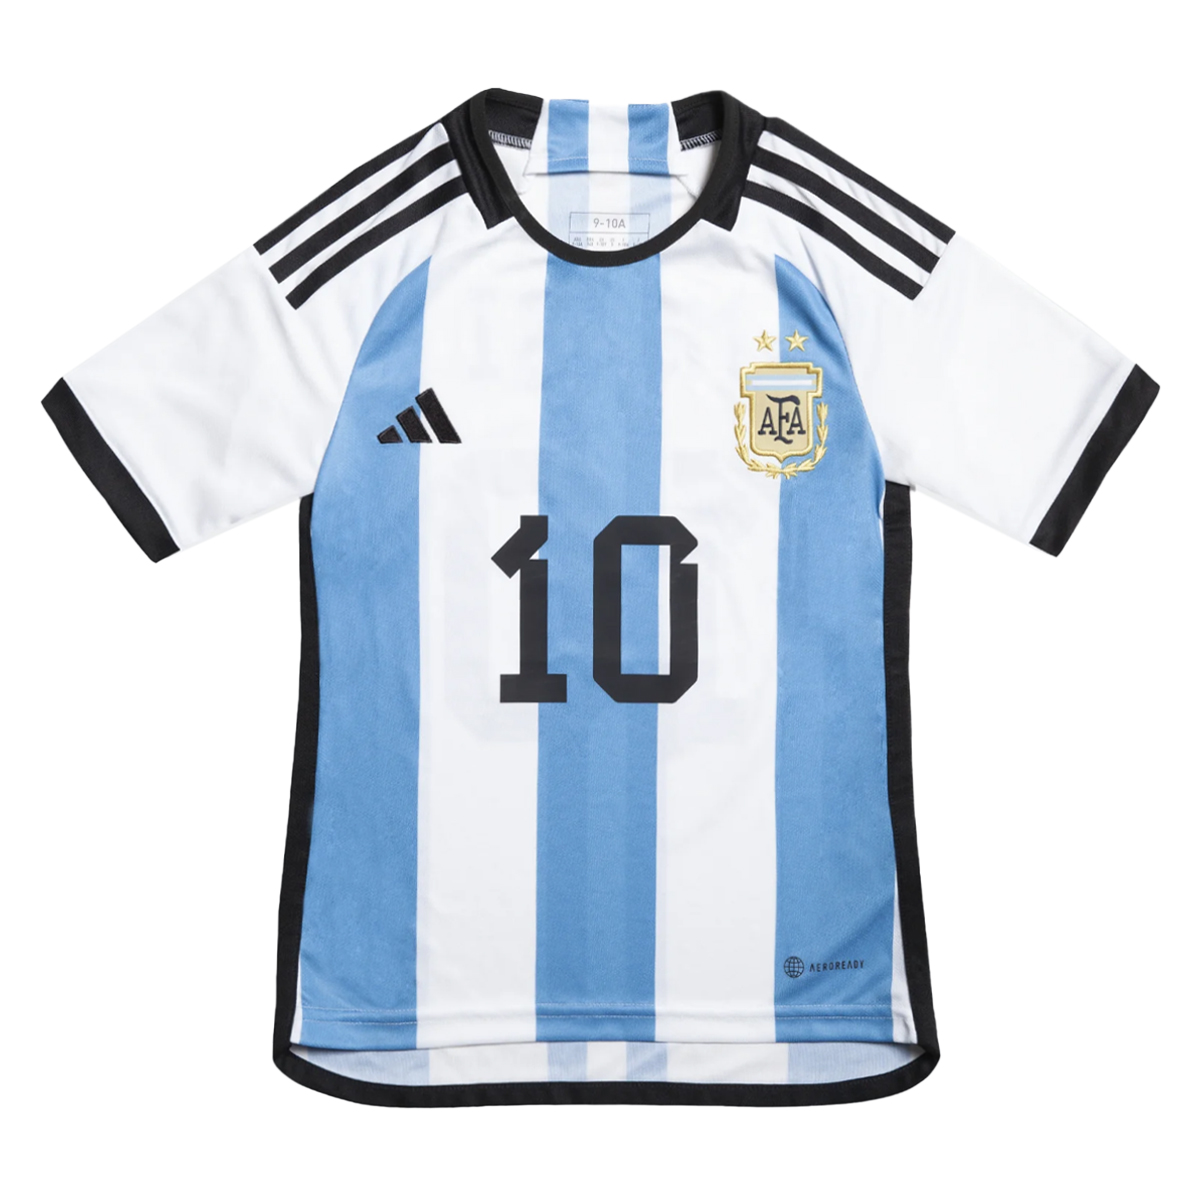 Camiseta adidas AFA Messi Infantil,  image number null